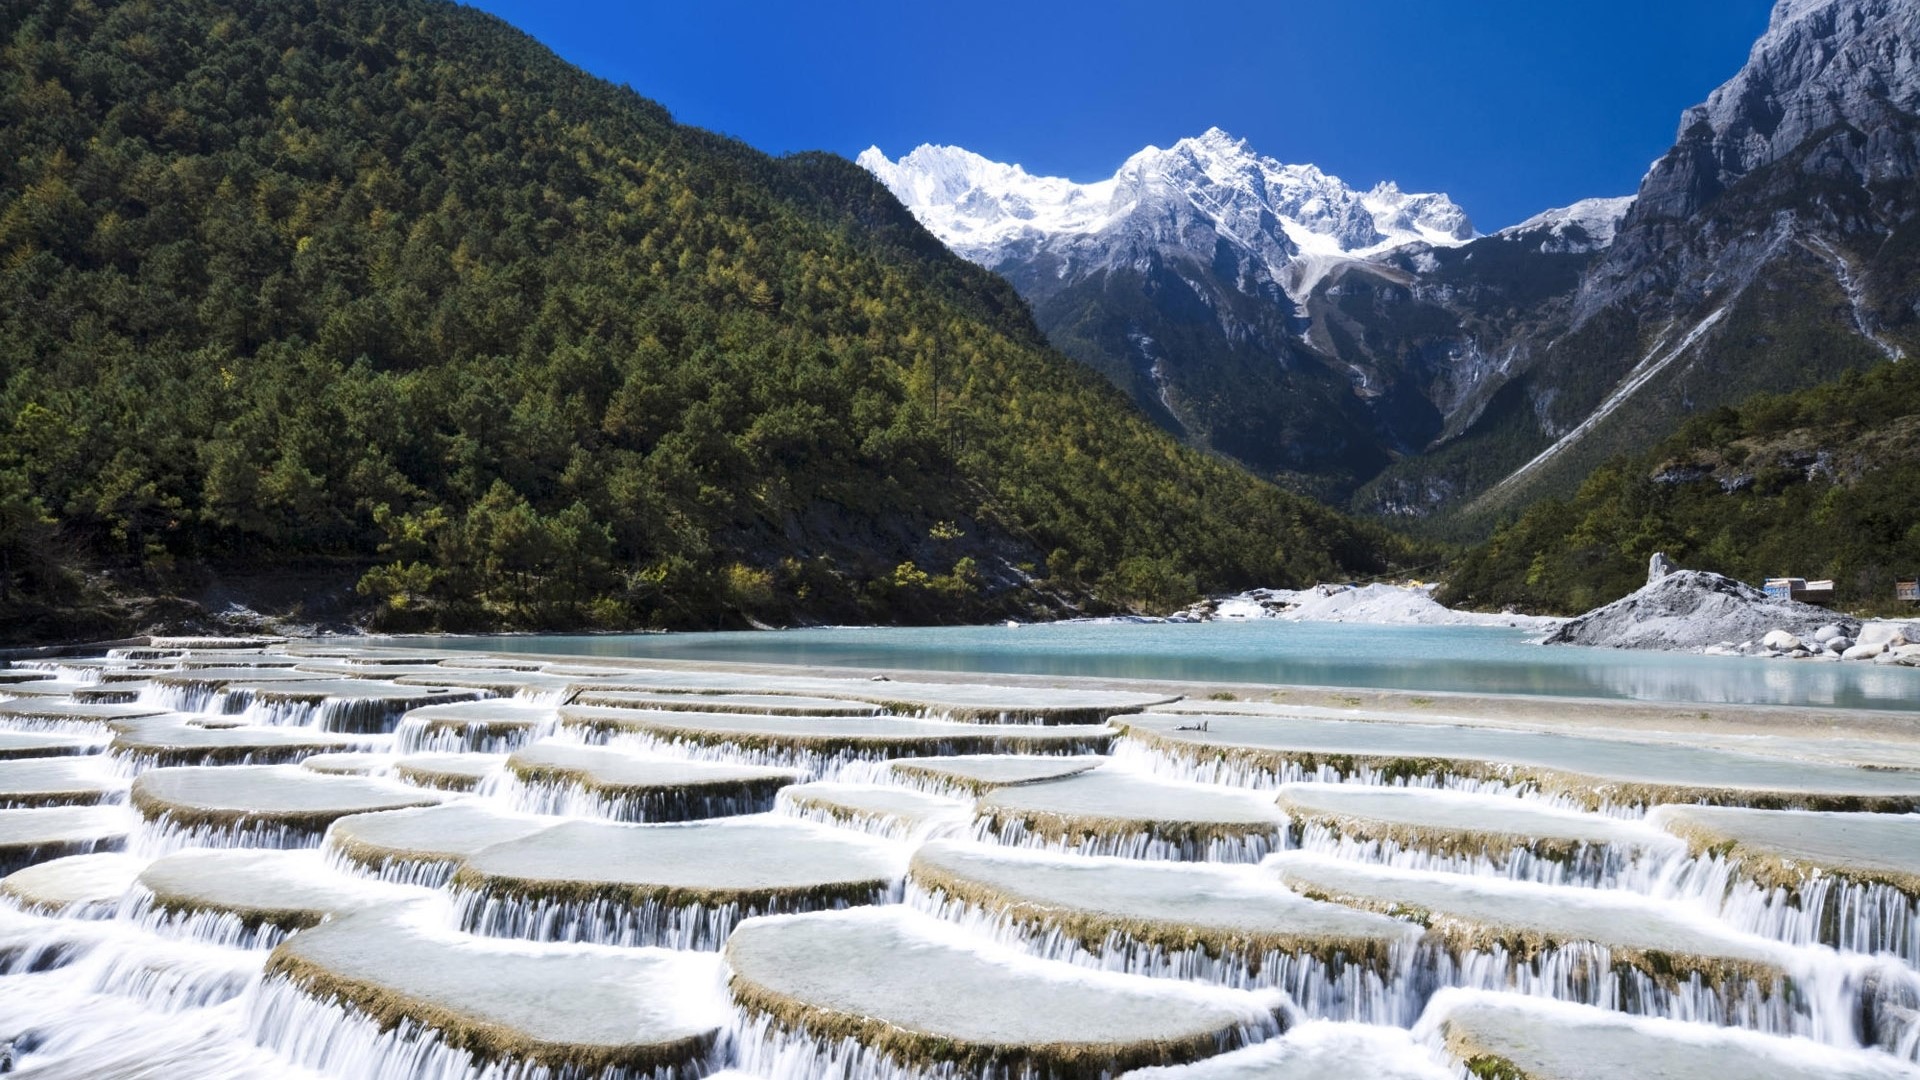 Lijiang: A Breathtaking Journey Through China's Ancient Naxi Kingdom